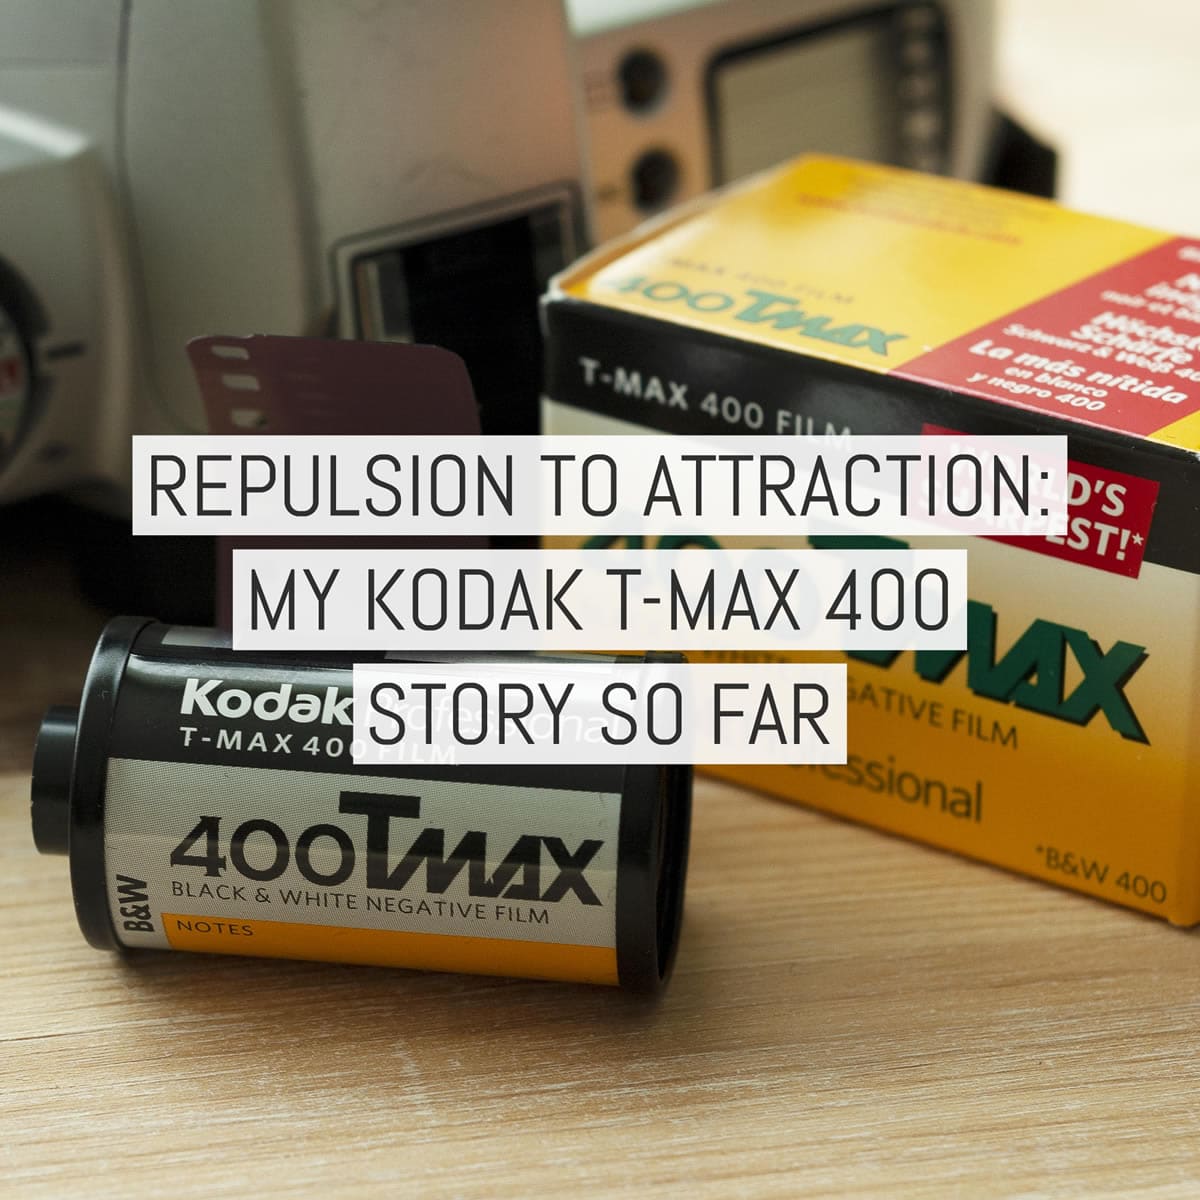 Cover - Repulsion to attraction - My Kodak T-MAX 400 story so far